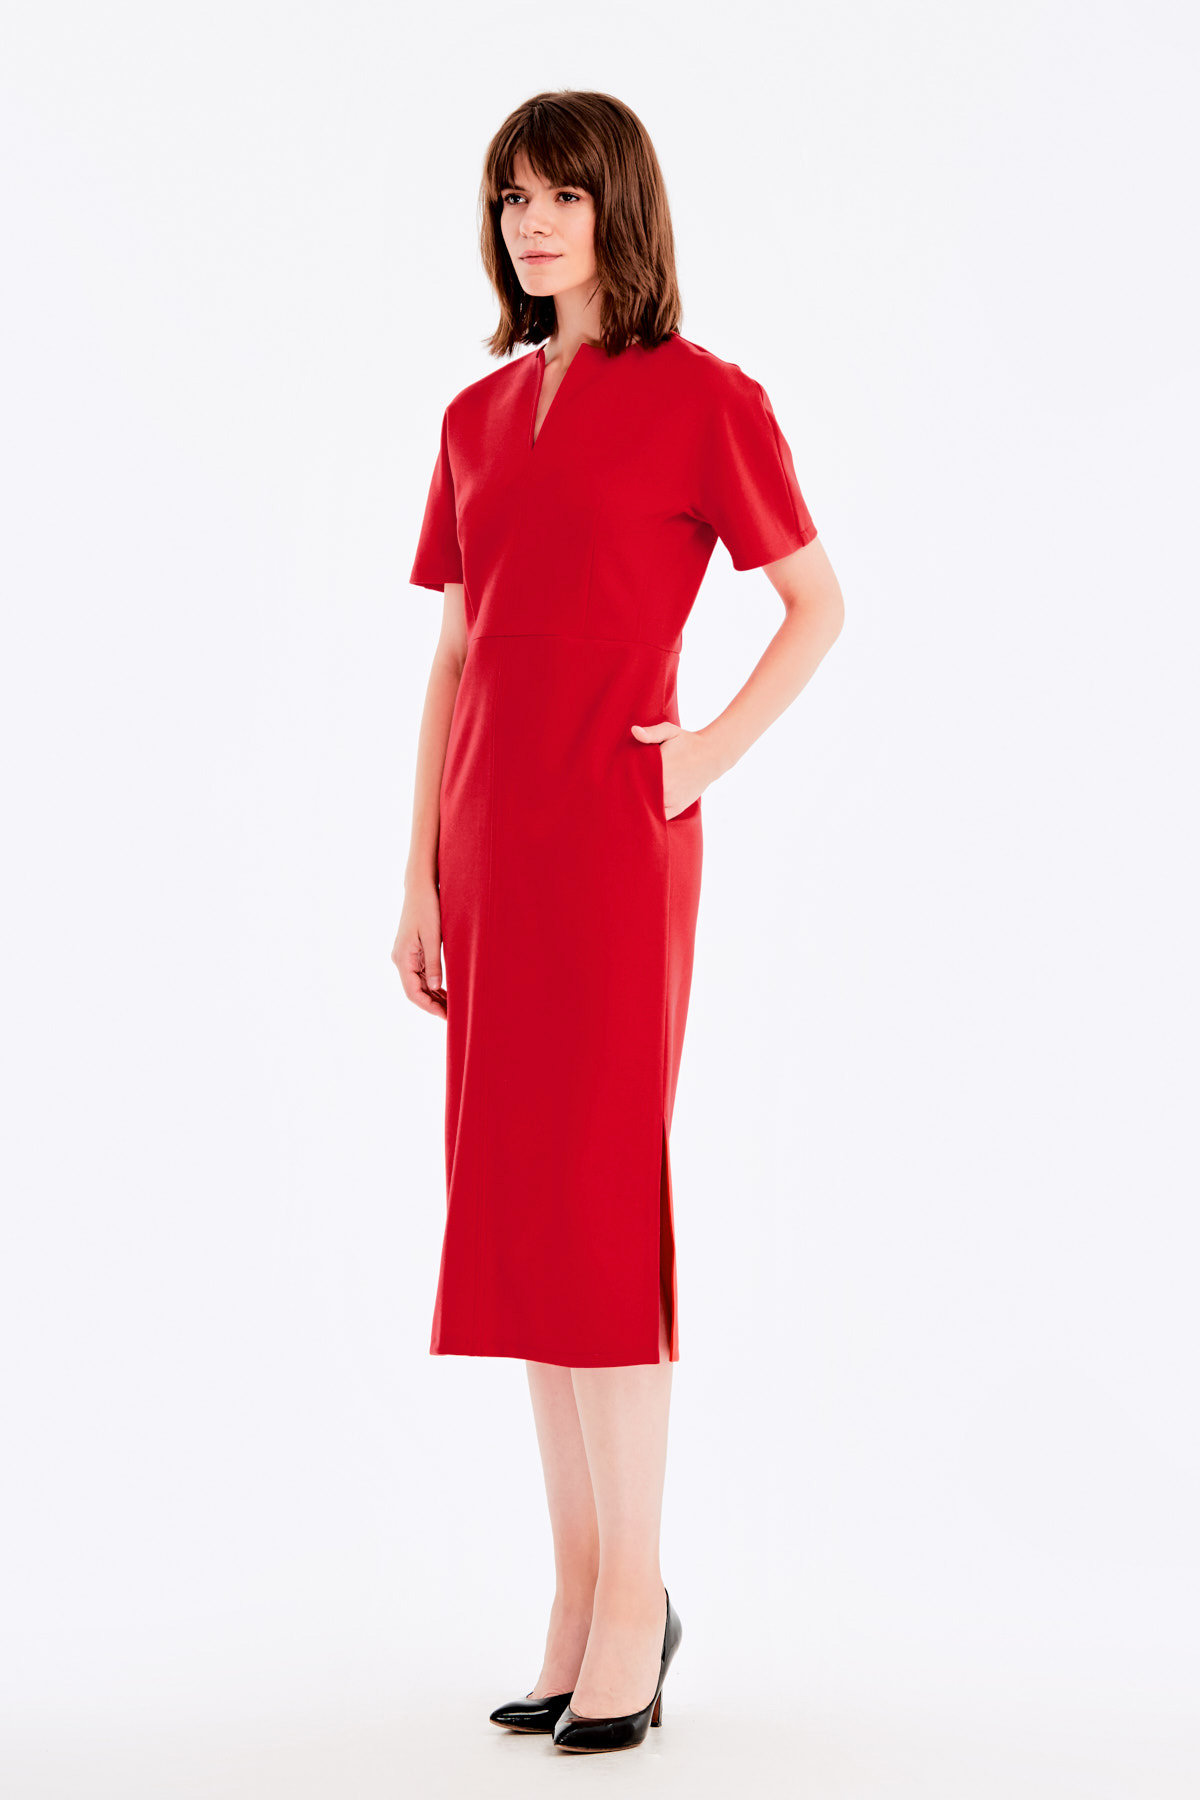 V-neck red dress with slits  , photo 4